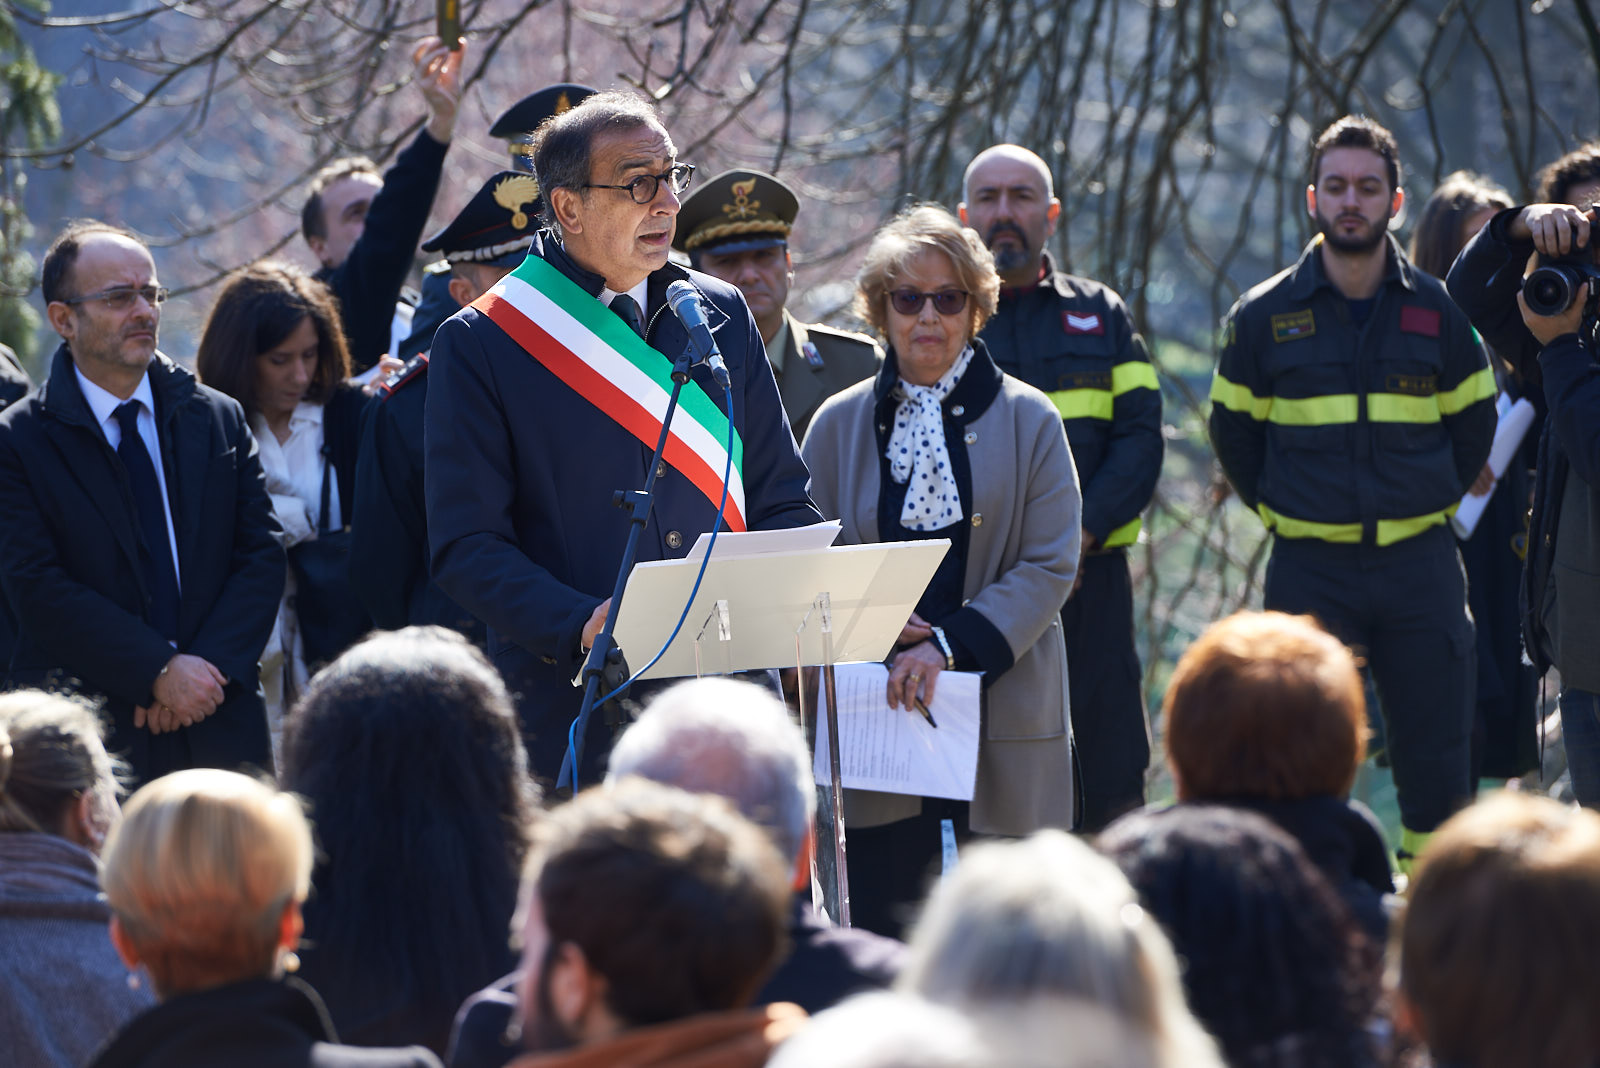 The opening speech of the Mayor Giuseppe Sala